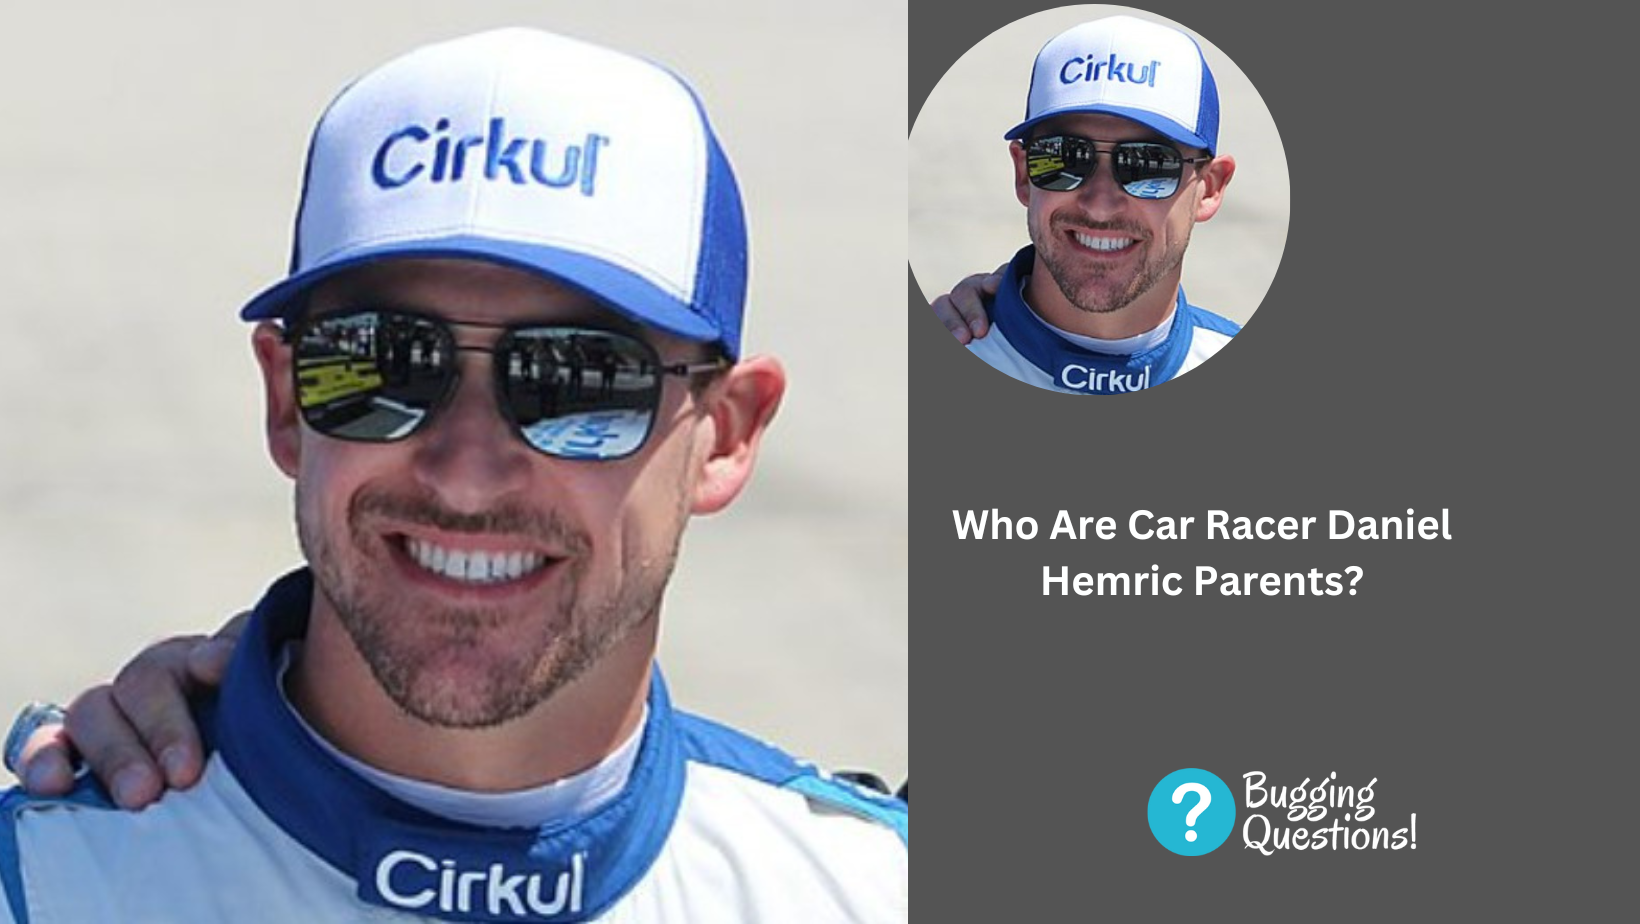 Who Are Car Racer Daniel Hemric Parents?